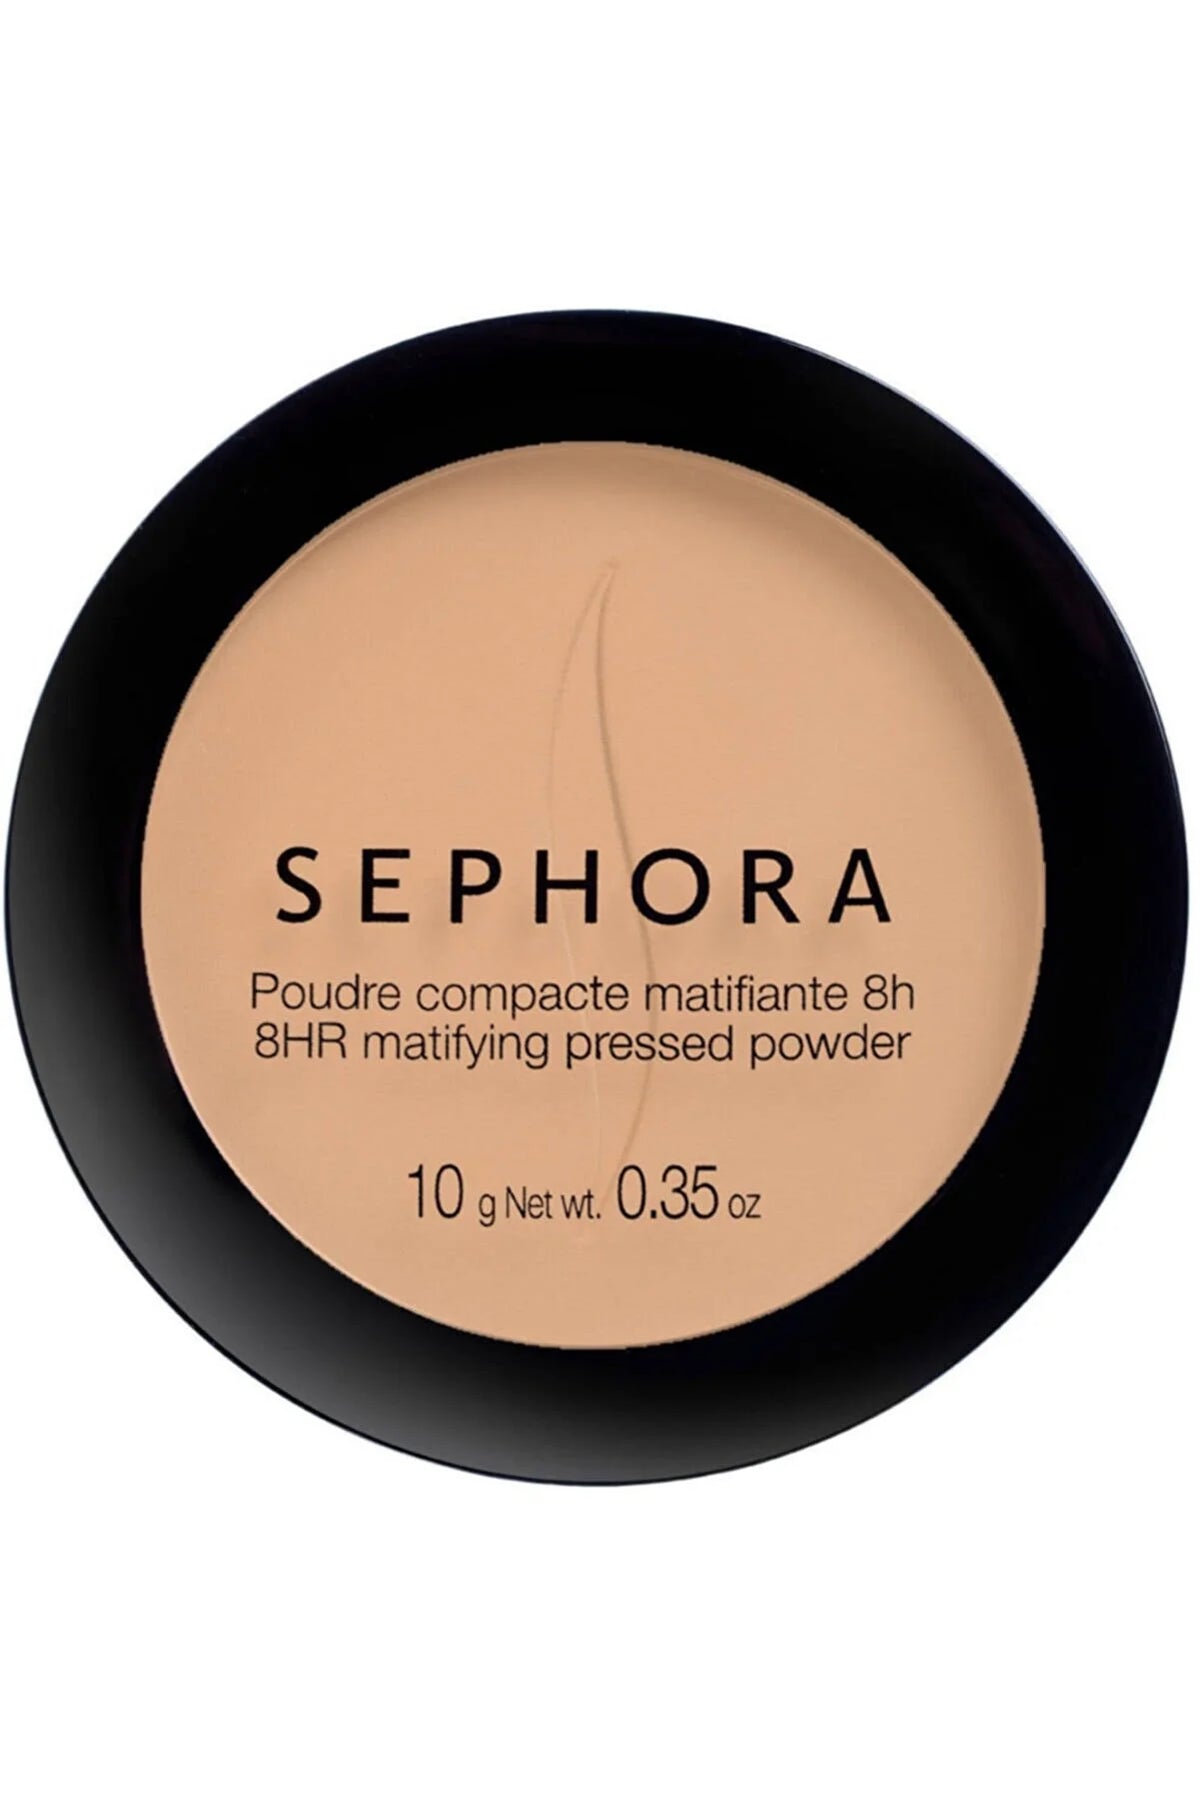 Sephora 8hr Mattifying Pressed Powder